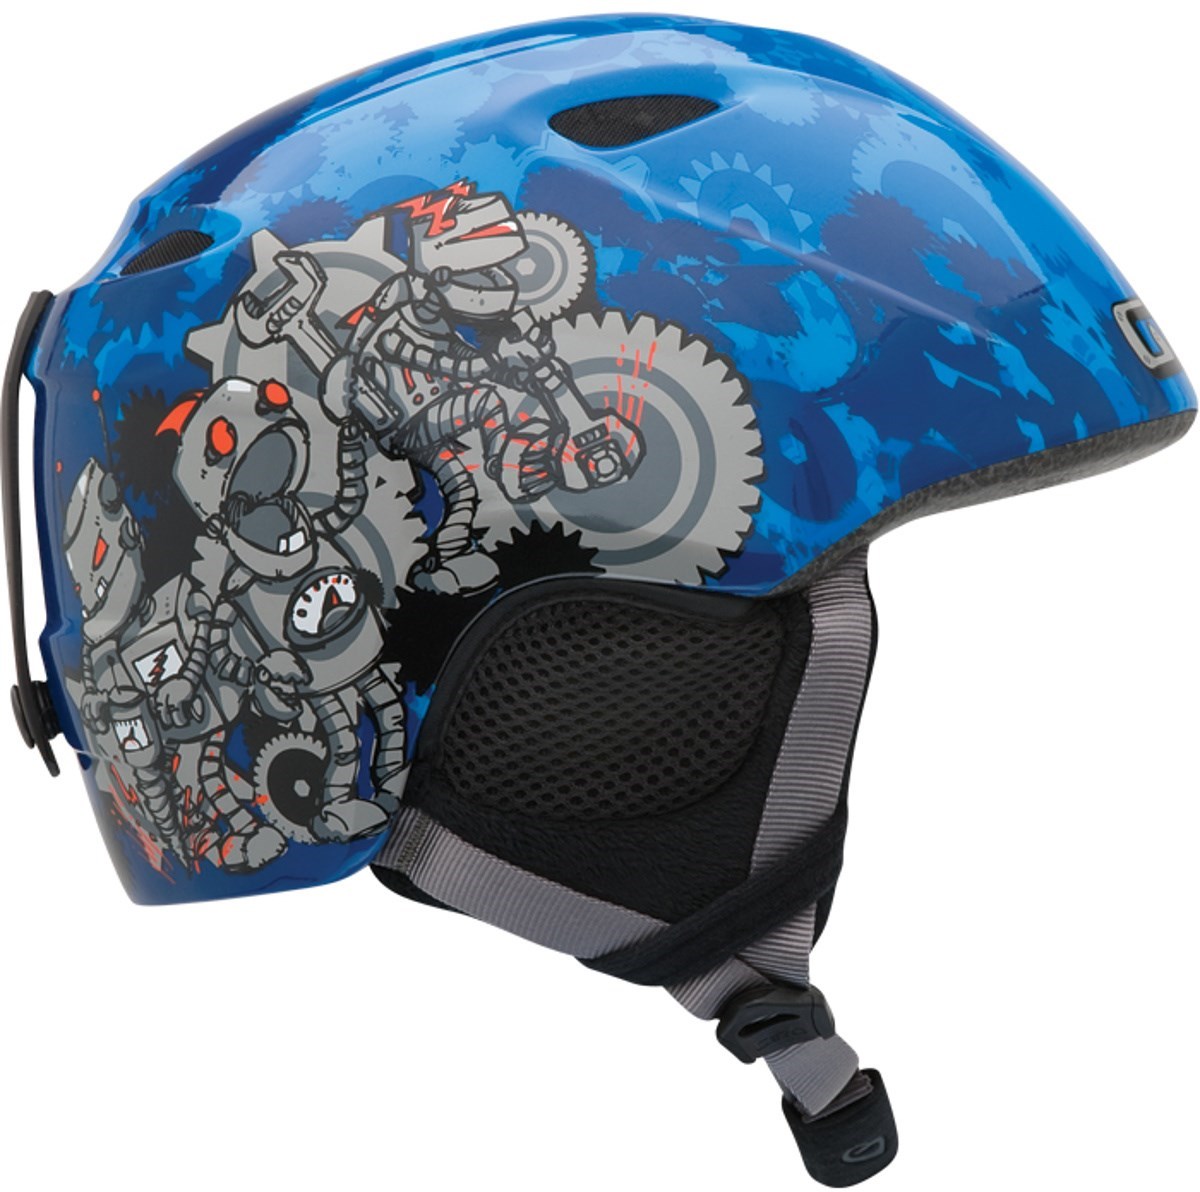 Giro Slingshot Kids Snowboard Helmet product image